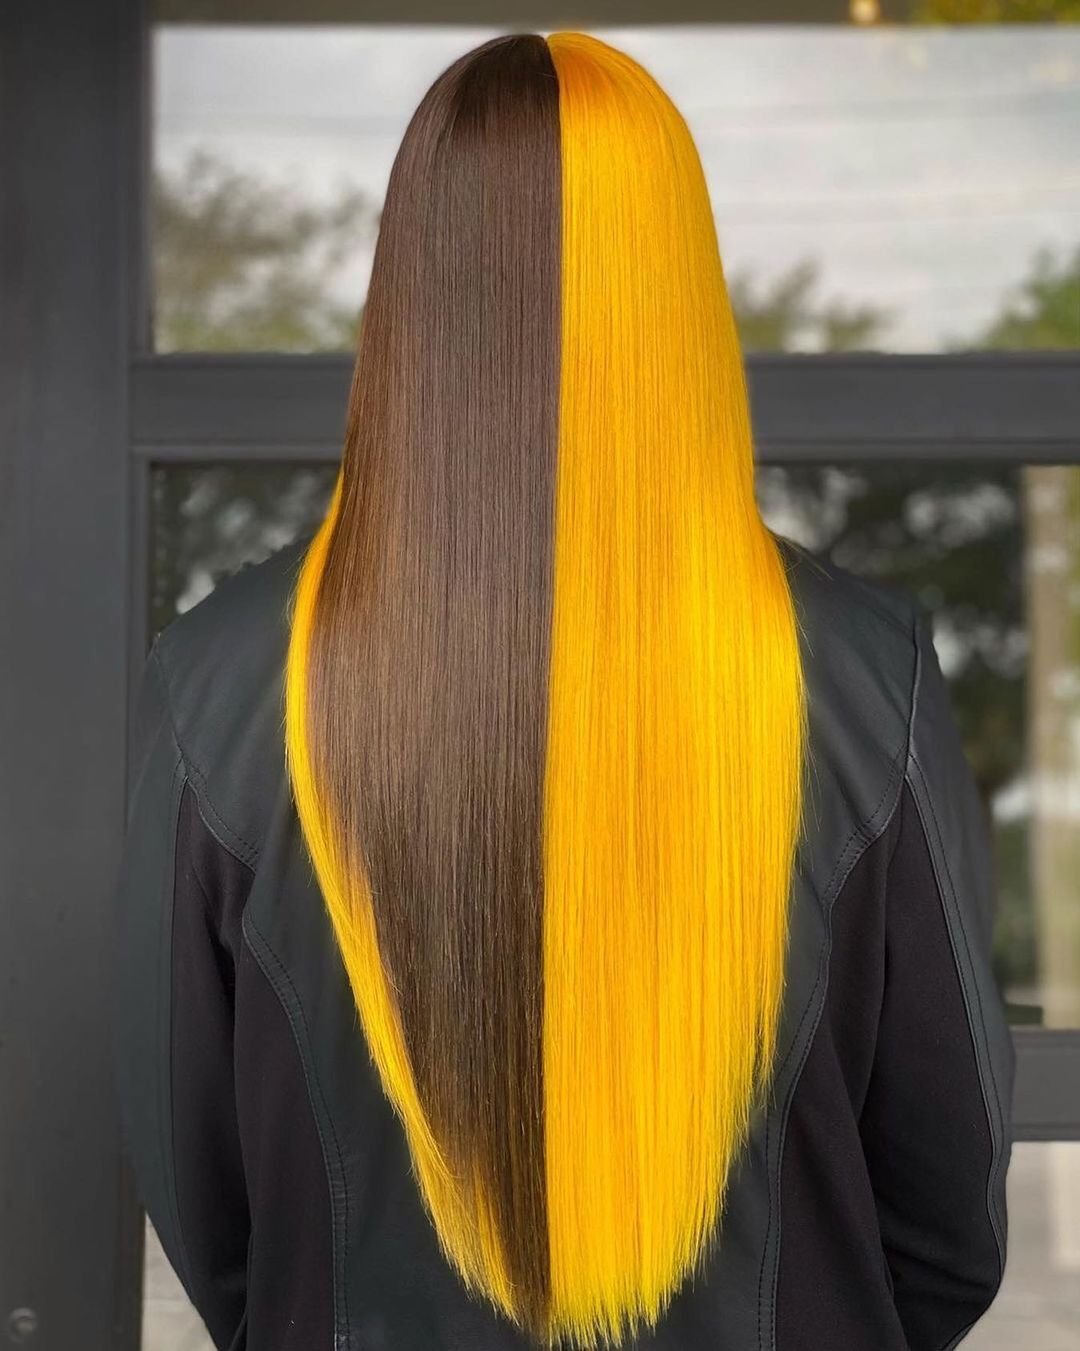 5 - Picture of Split Dye Gemini Hairstyles